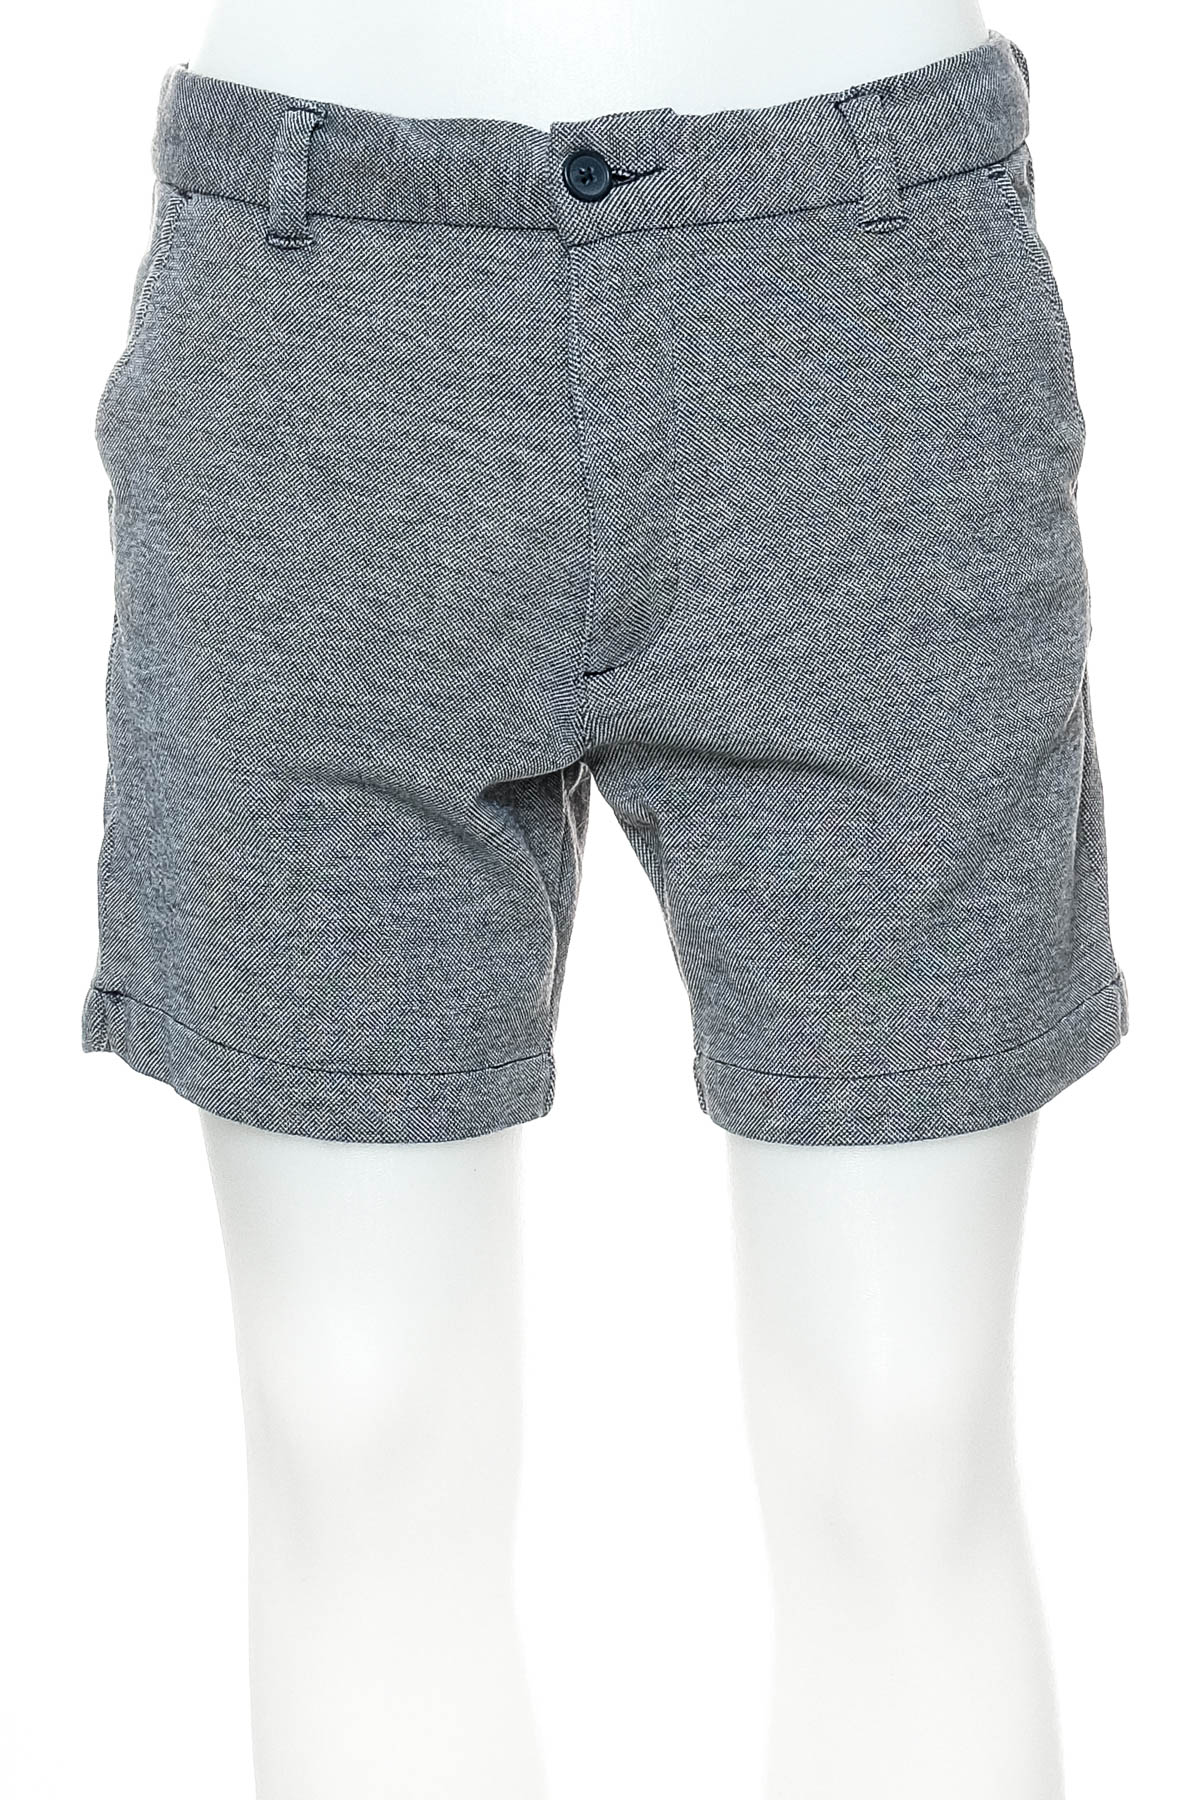 Men's shorts - Watson's - 0